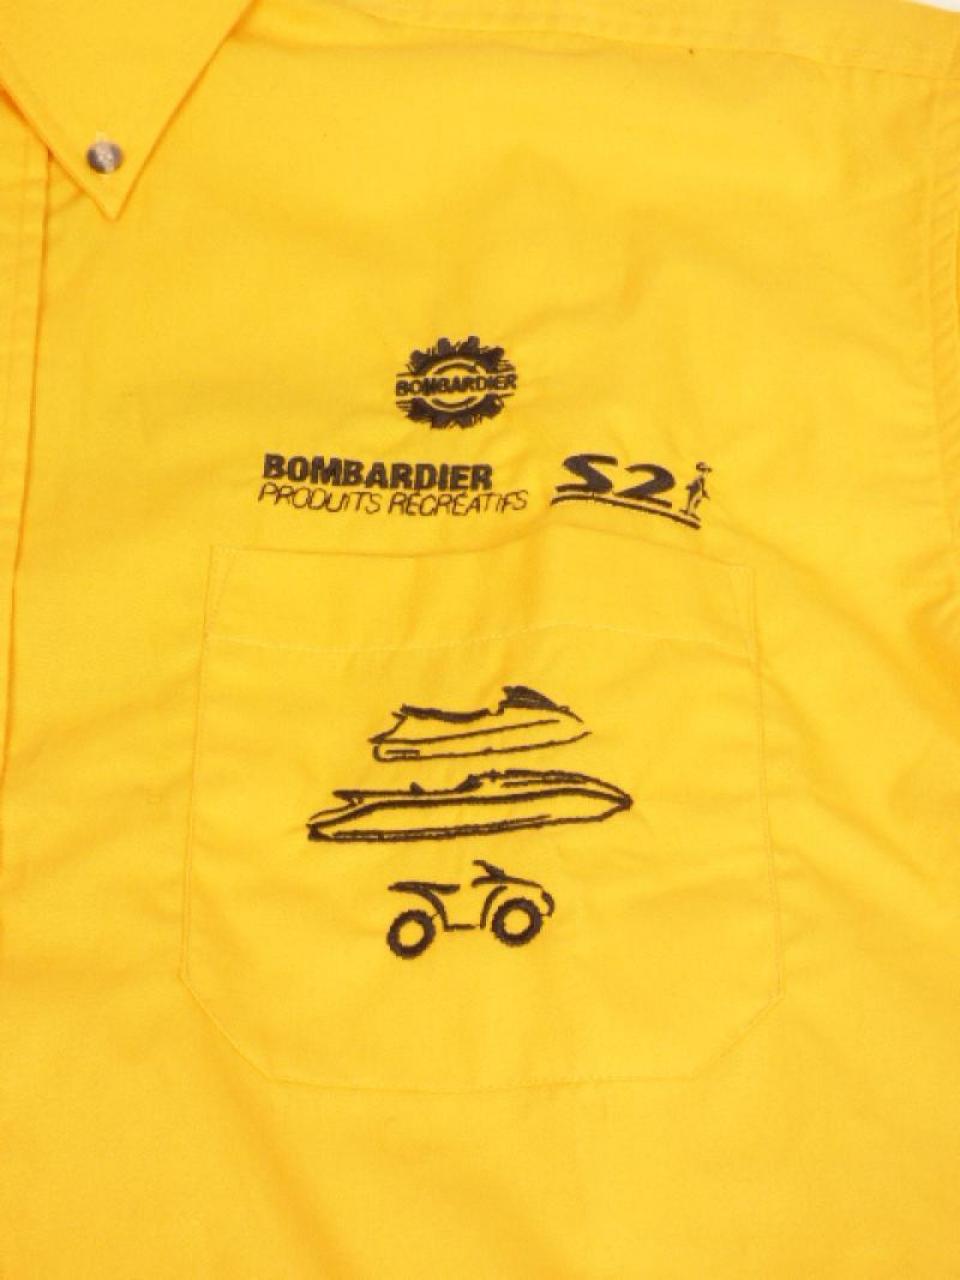 Chemise jaune Bombardier S2I homme Taille S quad pour moto scooter atv buggy Neuf